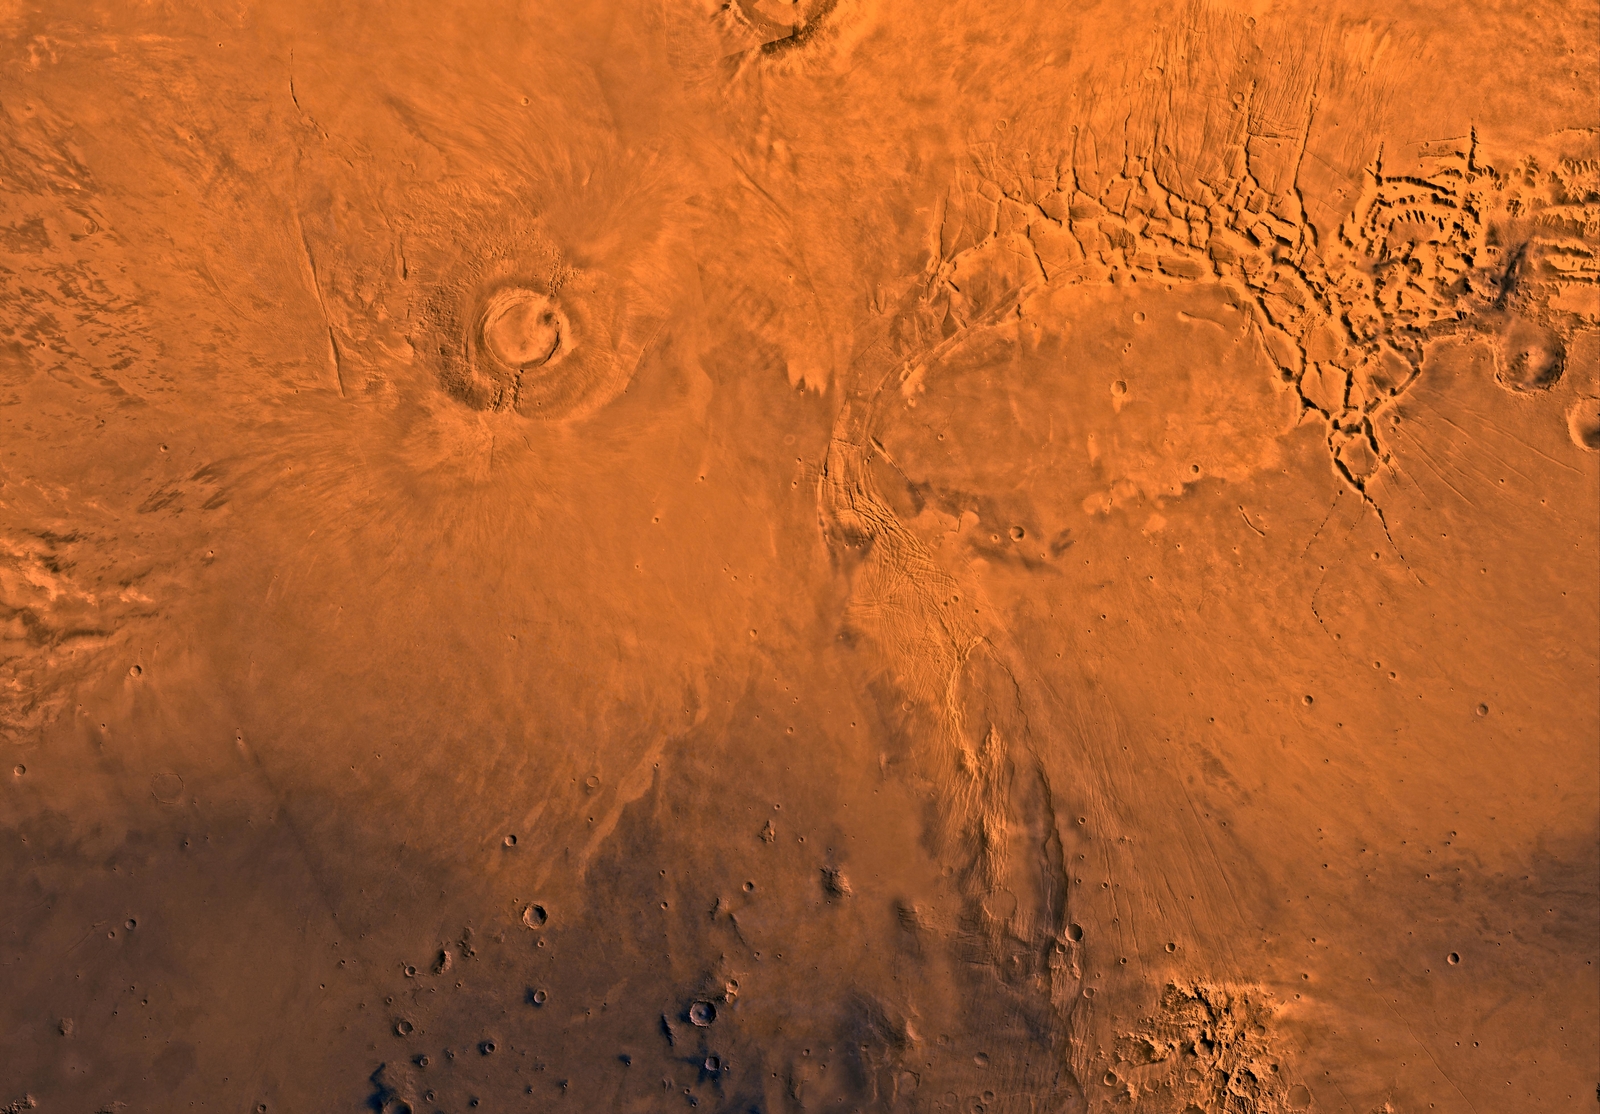 Mars digital-image mosaic merged with color of the MC-17 quadrangle, Phoenicis Lacus region of Mars.